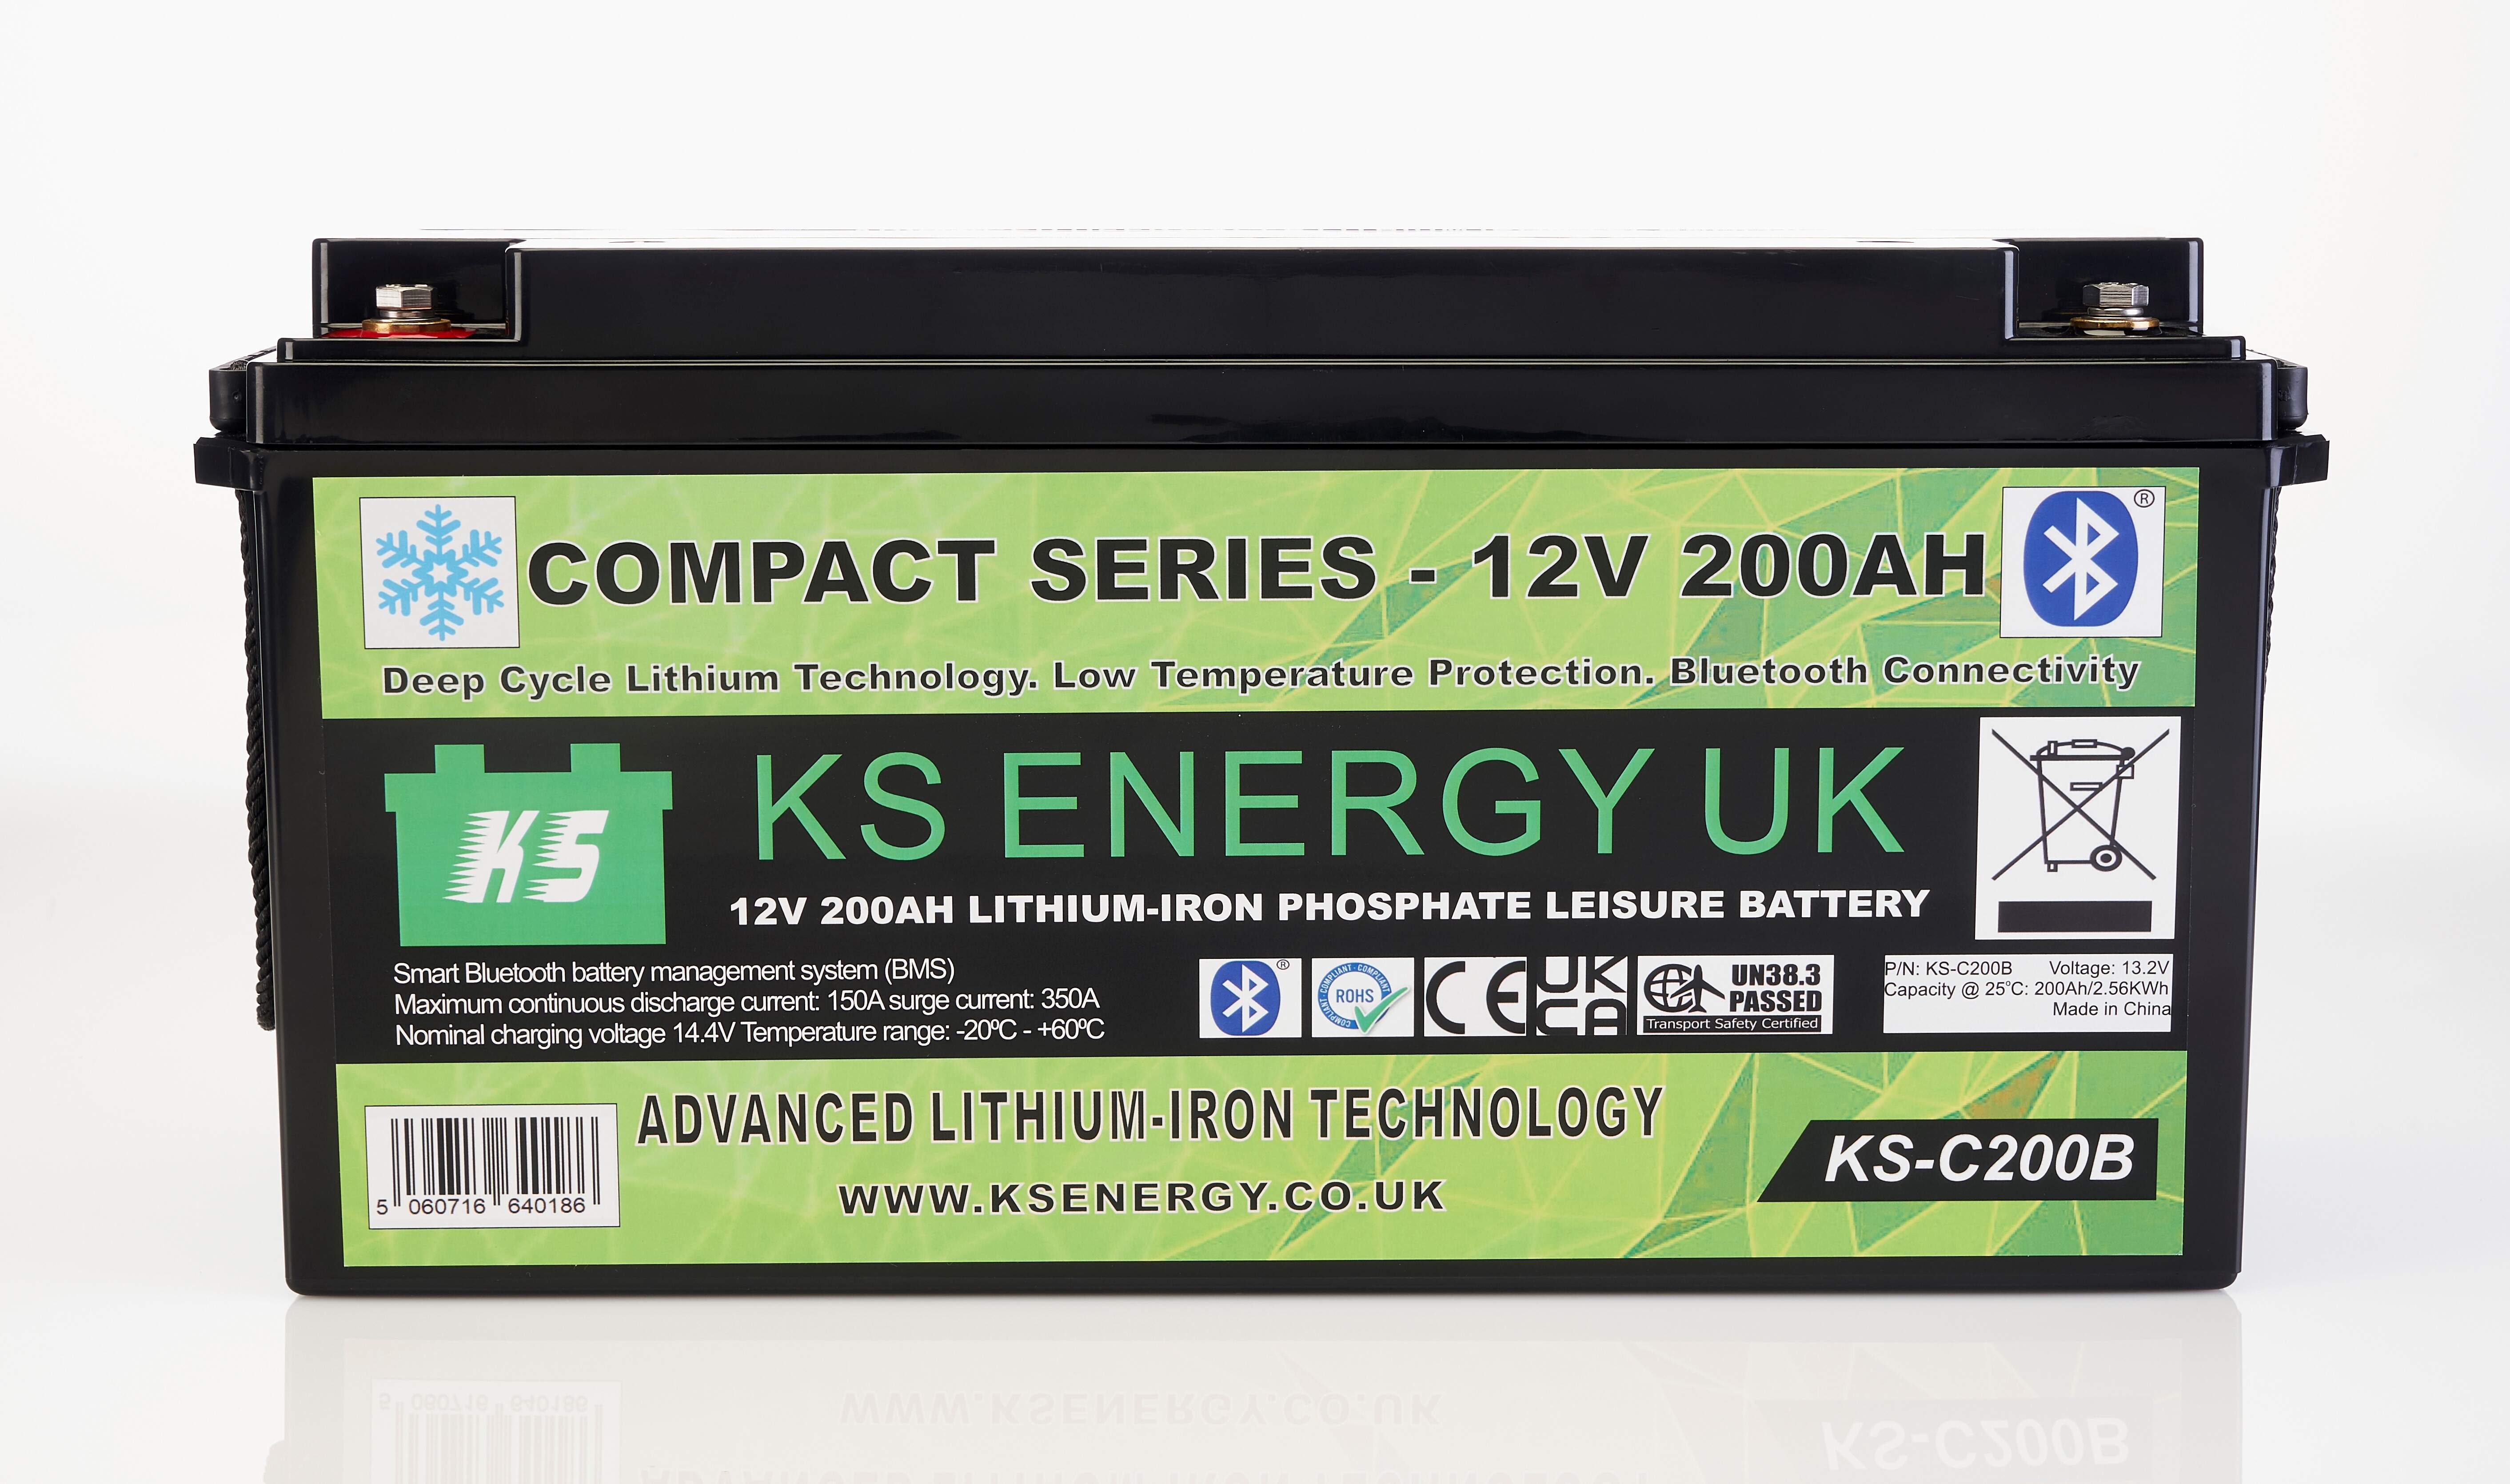 KS-C200B lithium-iron phosphate battery